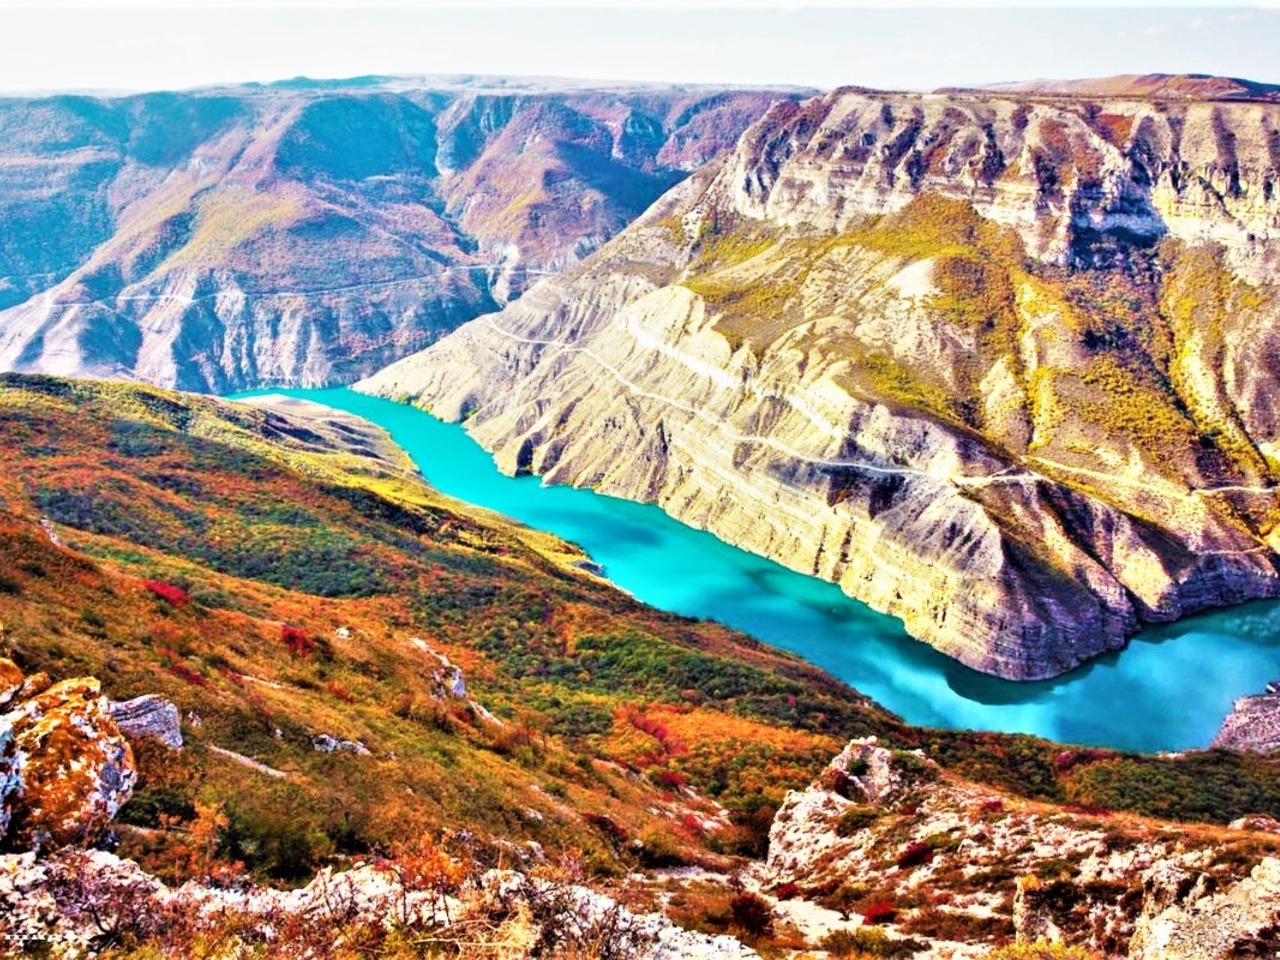 Сулакский каньон+бархан Сарыкум: чудеса Дагестана | Цена 25000₽, отзывы, описание экскурсии